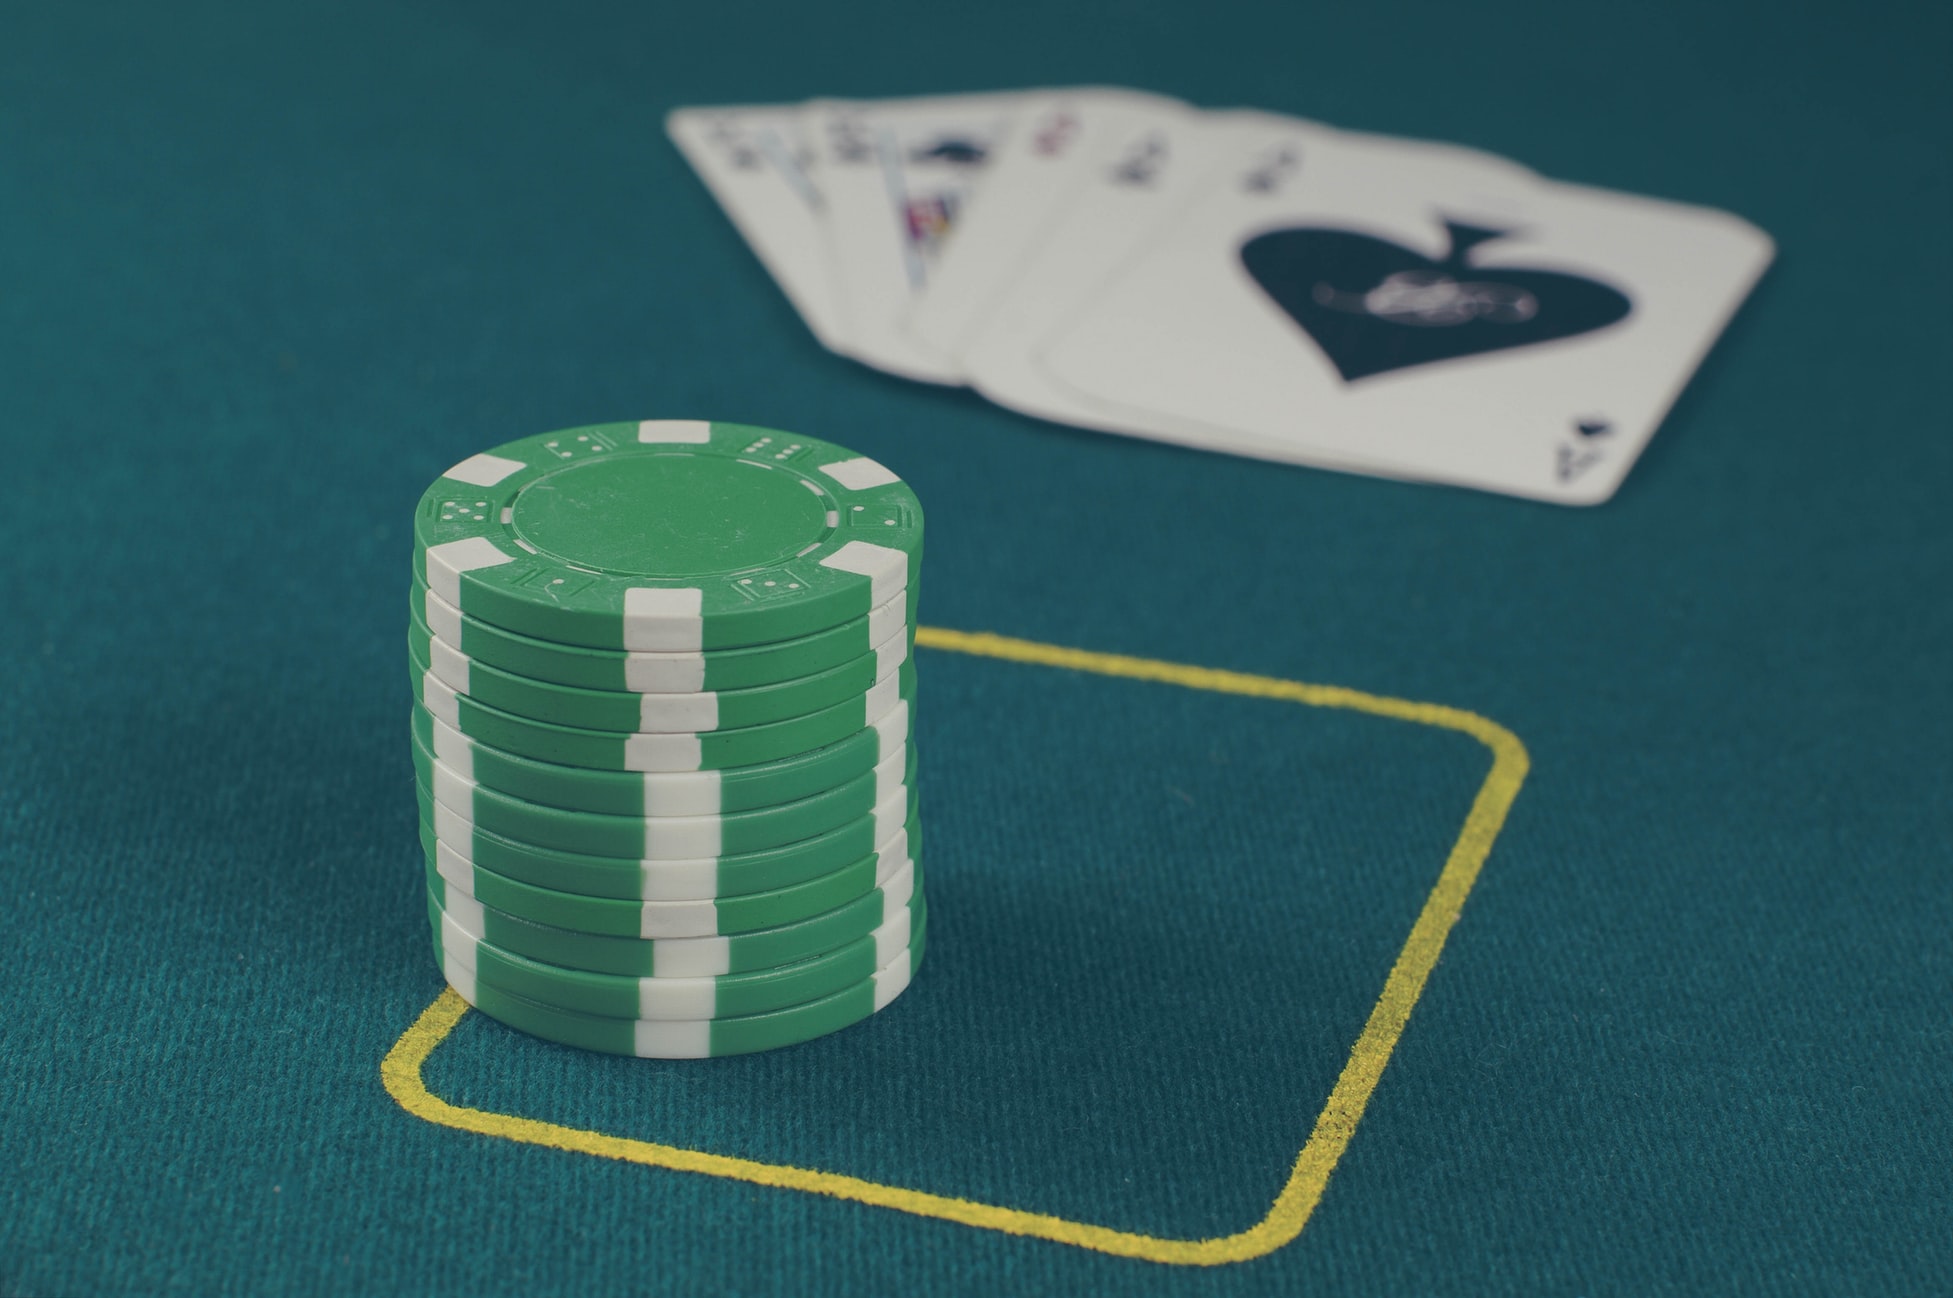 poker-green-table